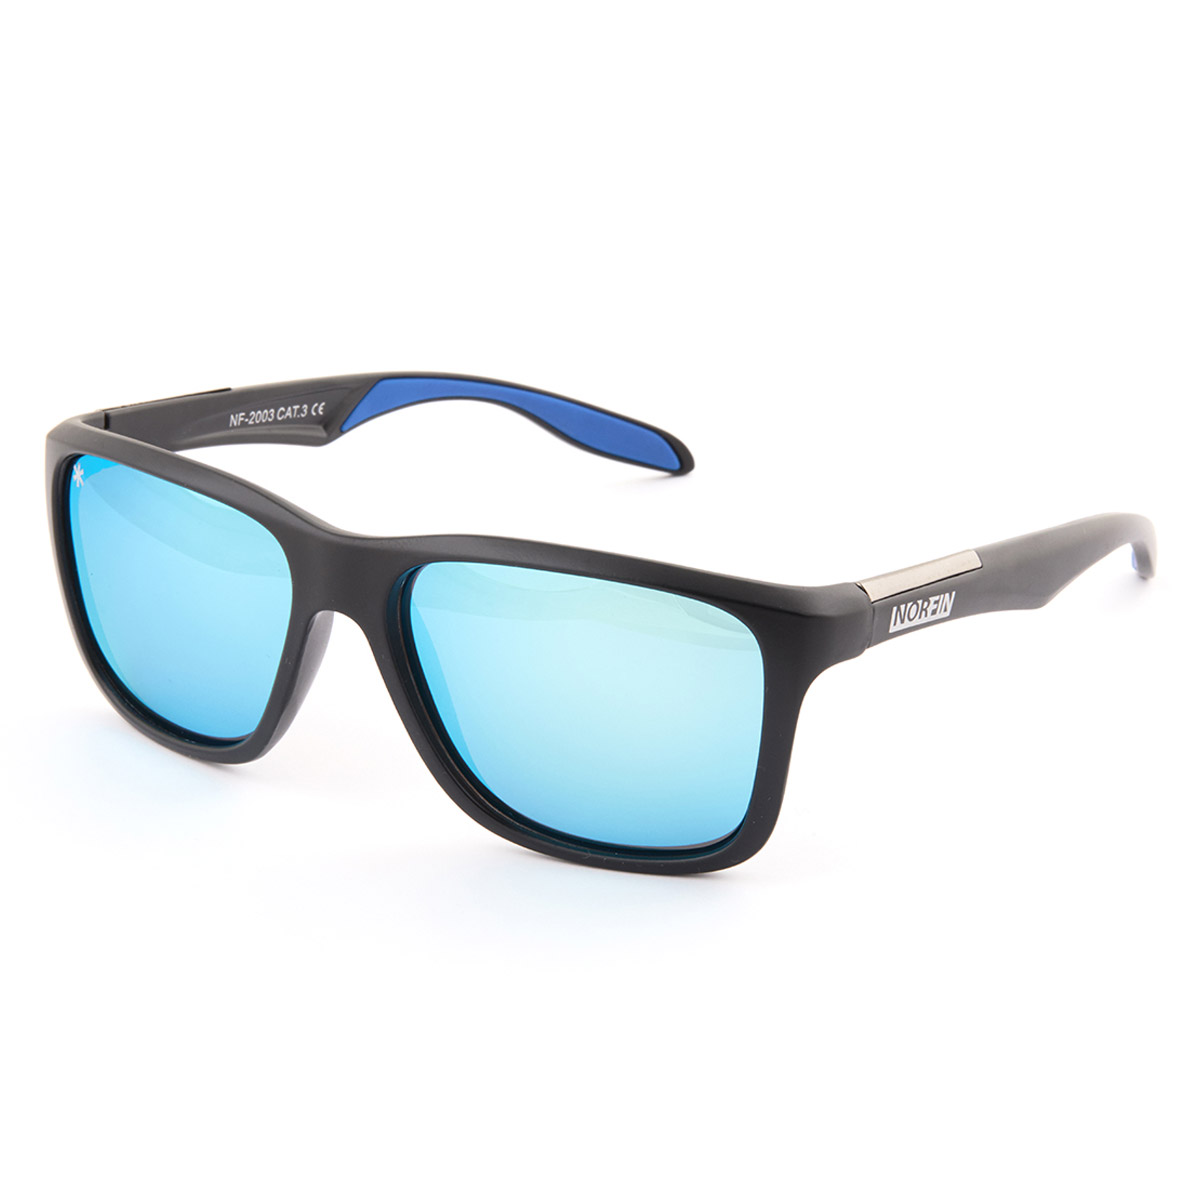 Norfin Polarized Sunglasses Gray / Mirror Ice Blue